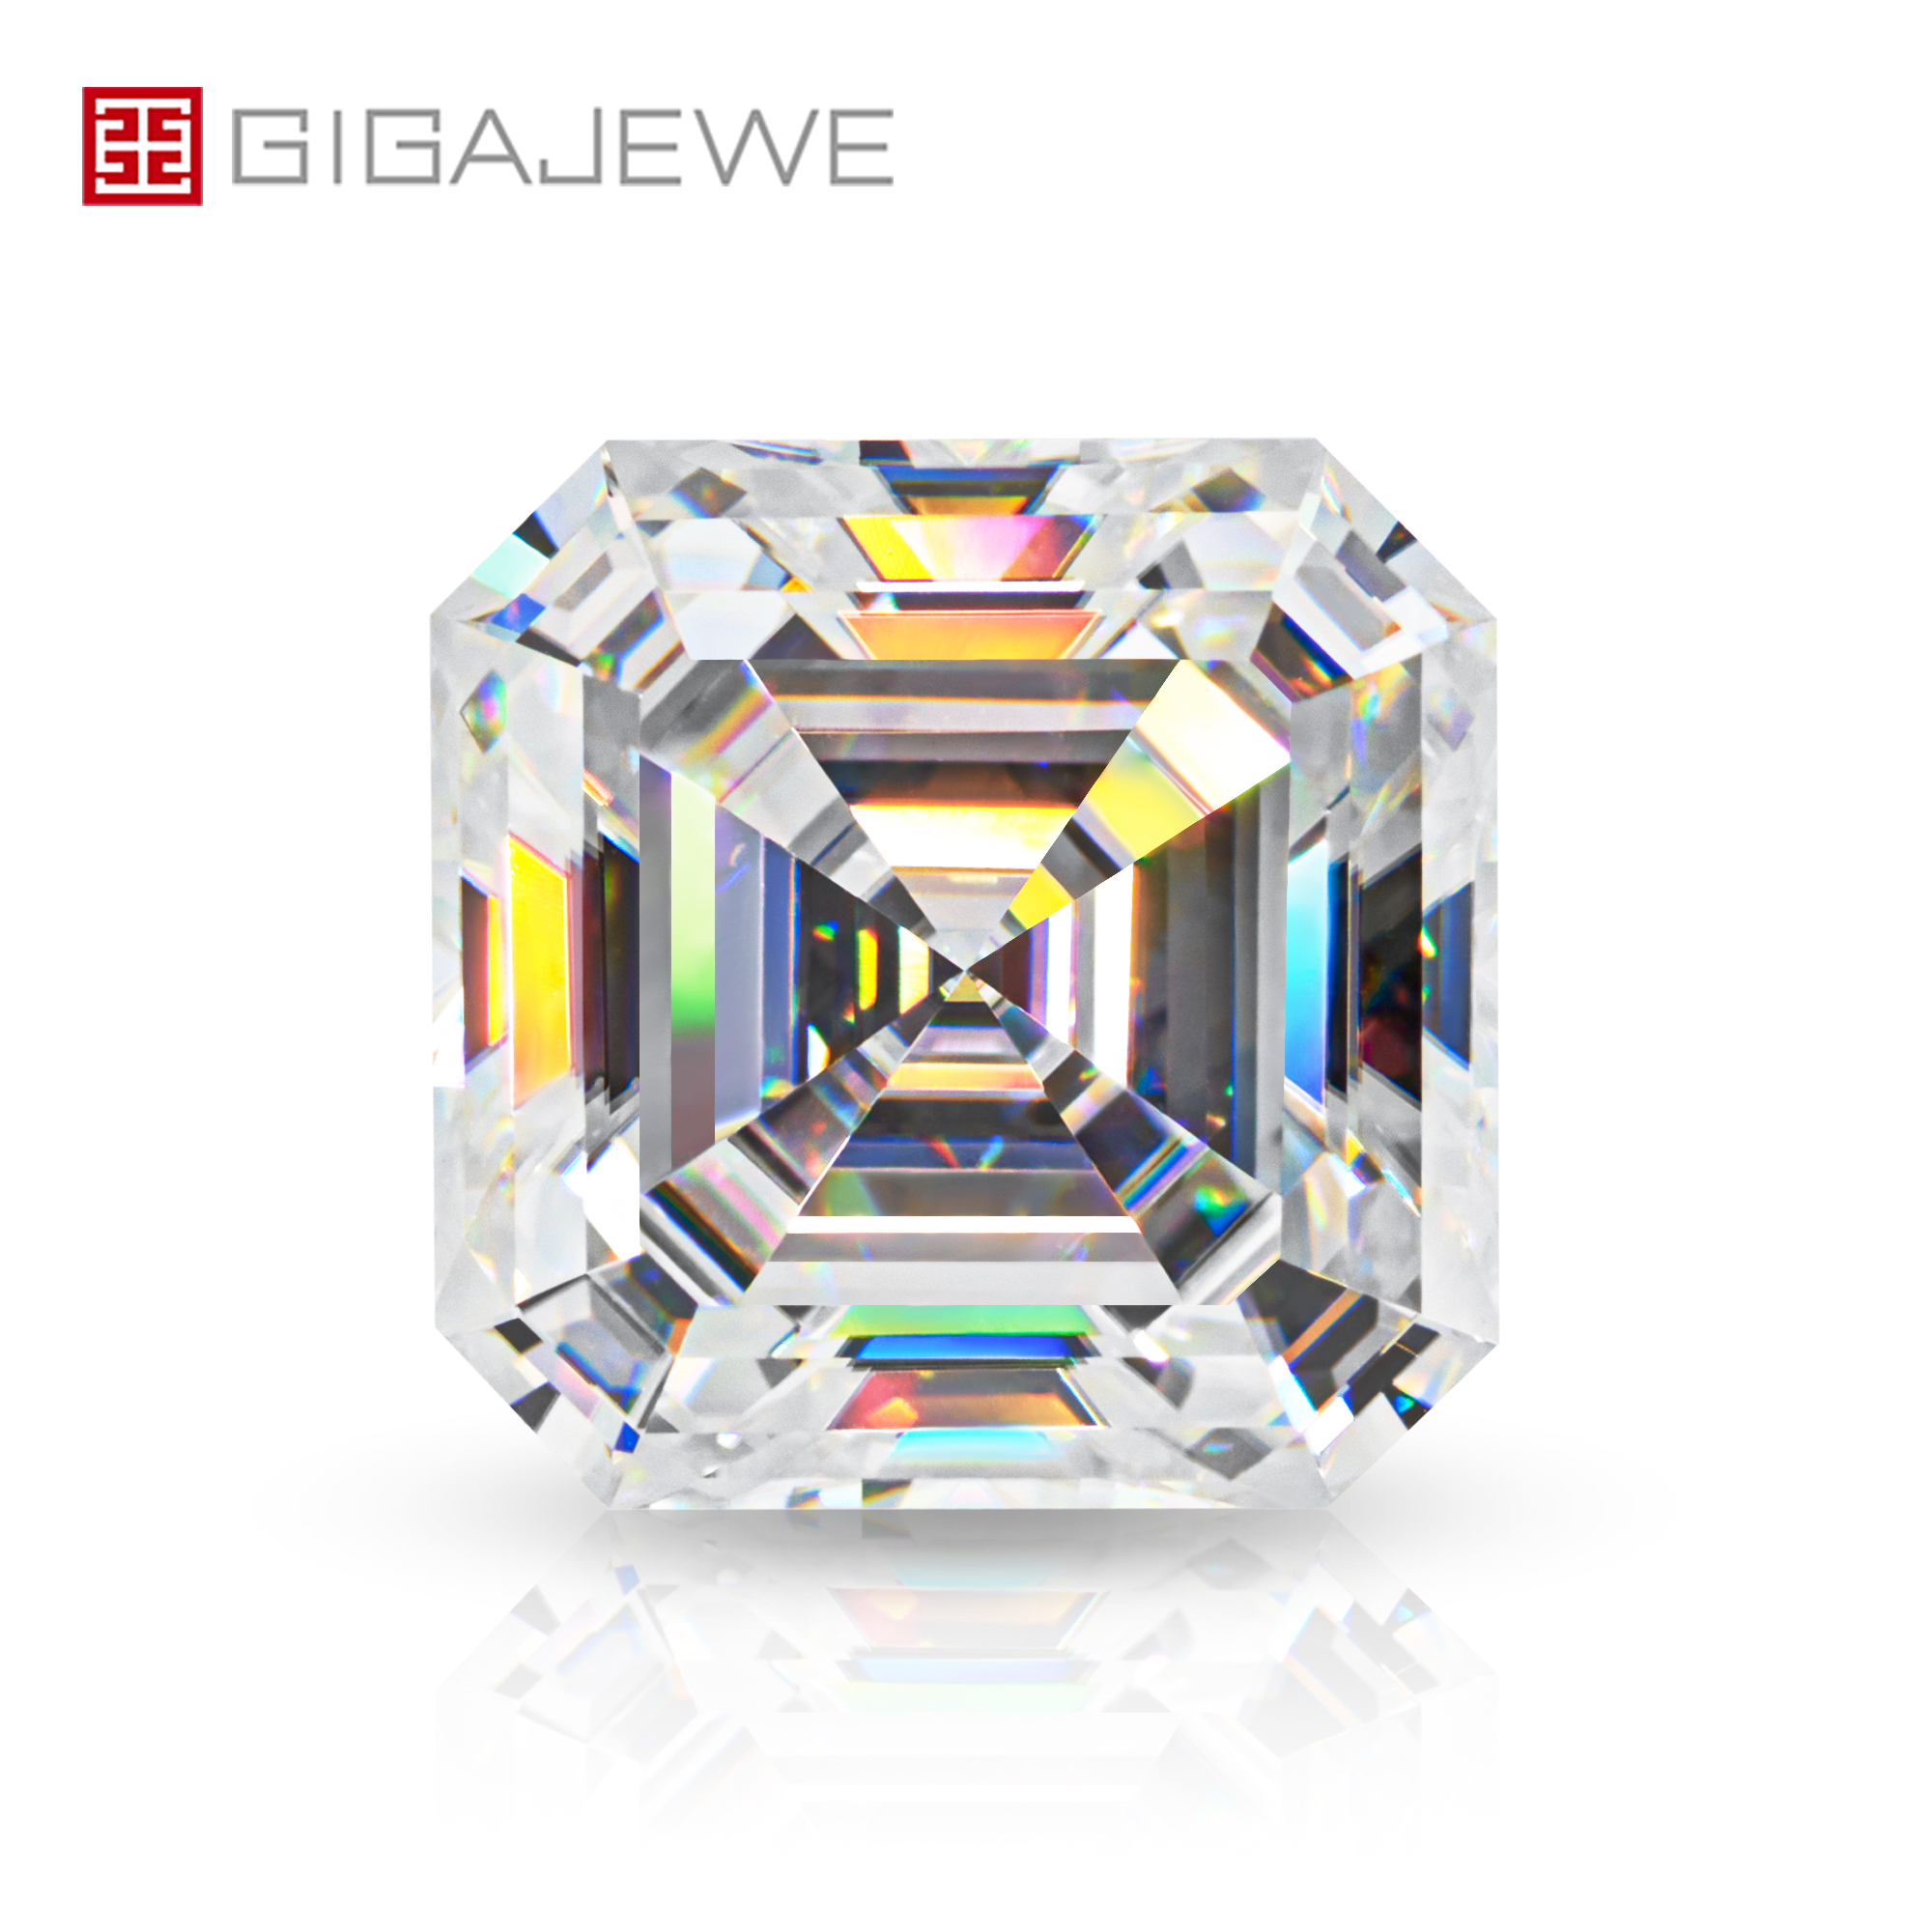 GIGAJEWE White D Color Asscher cut VVS1 moissanite diamond 0.5-7ct para joalheria corte manual